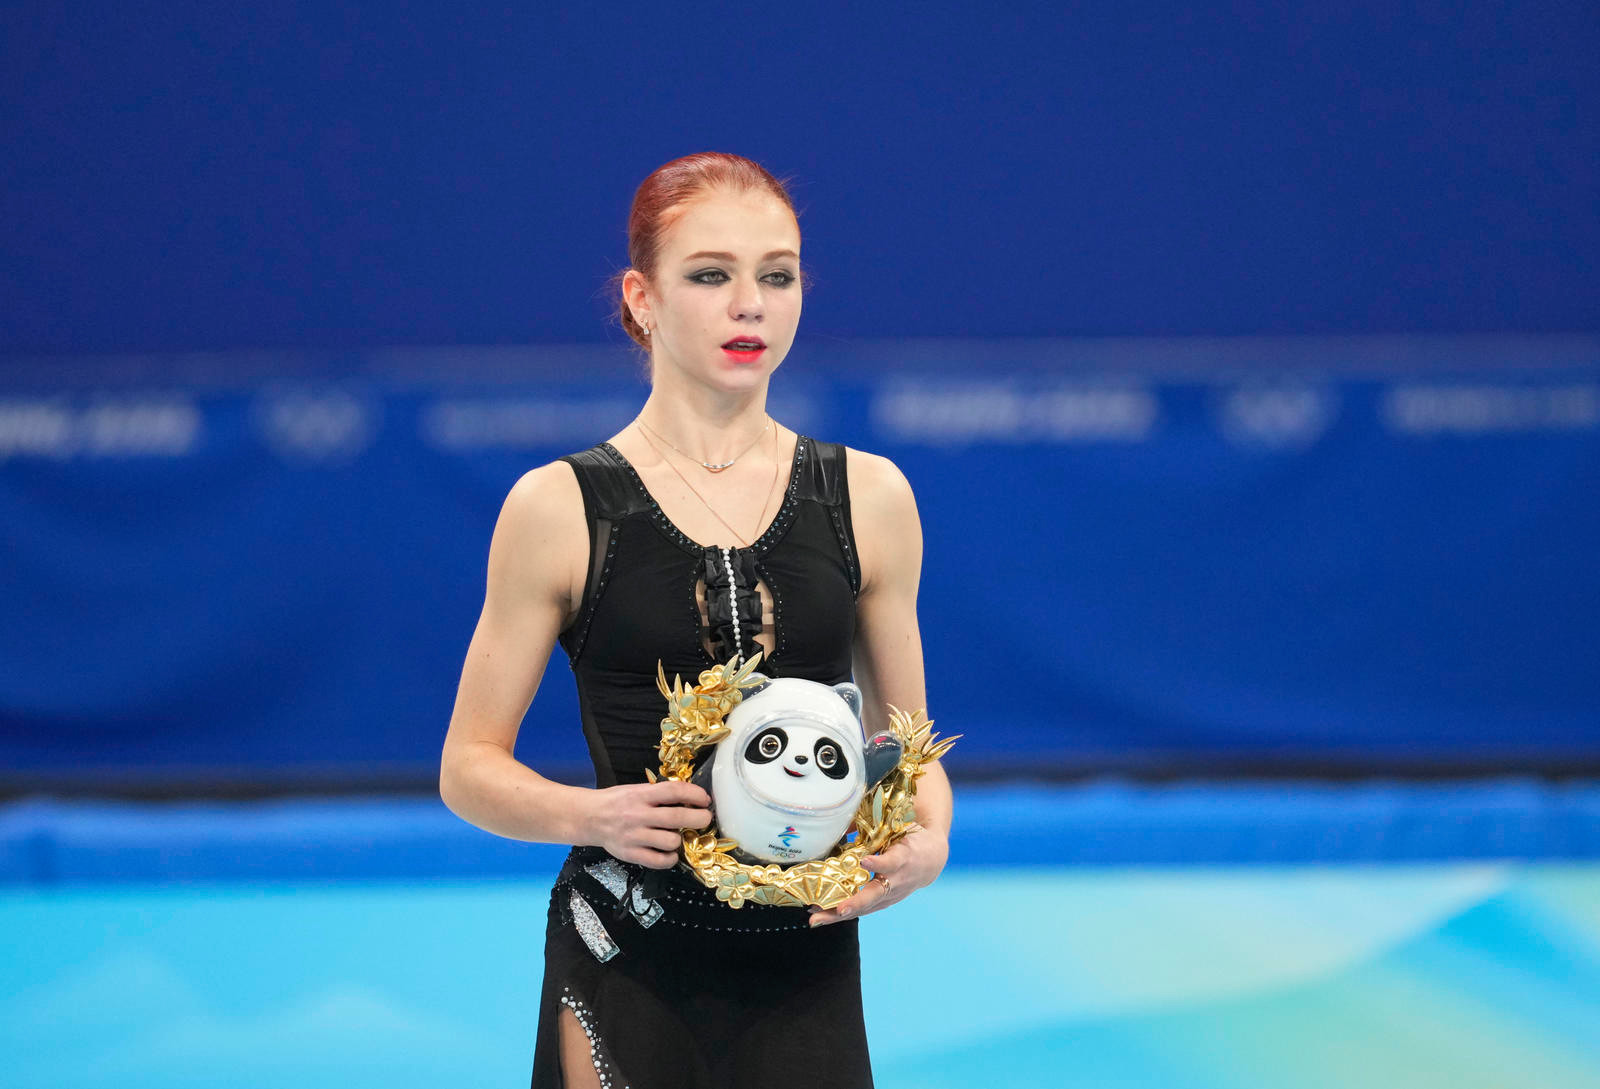 Alexandra Trusova